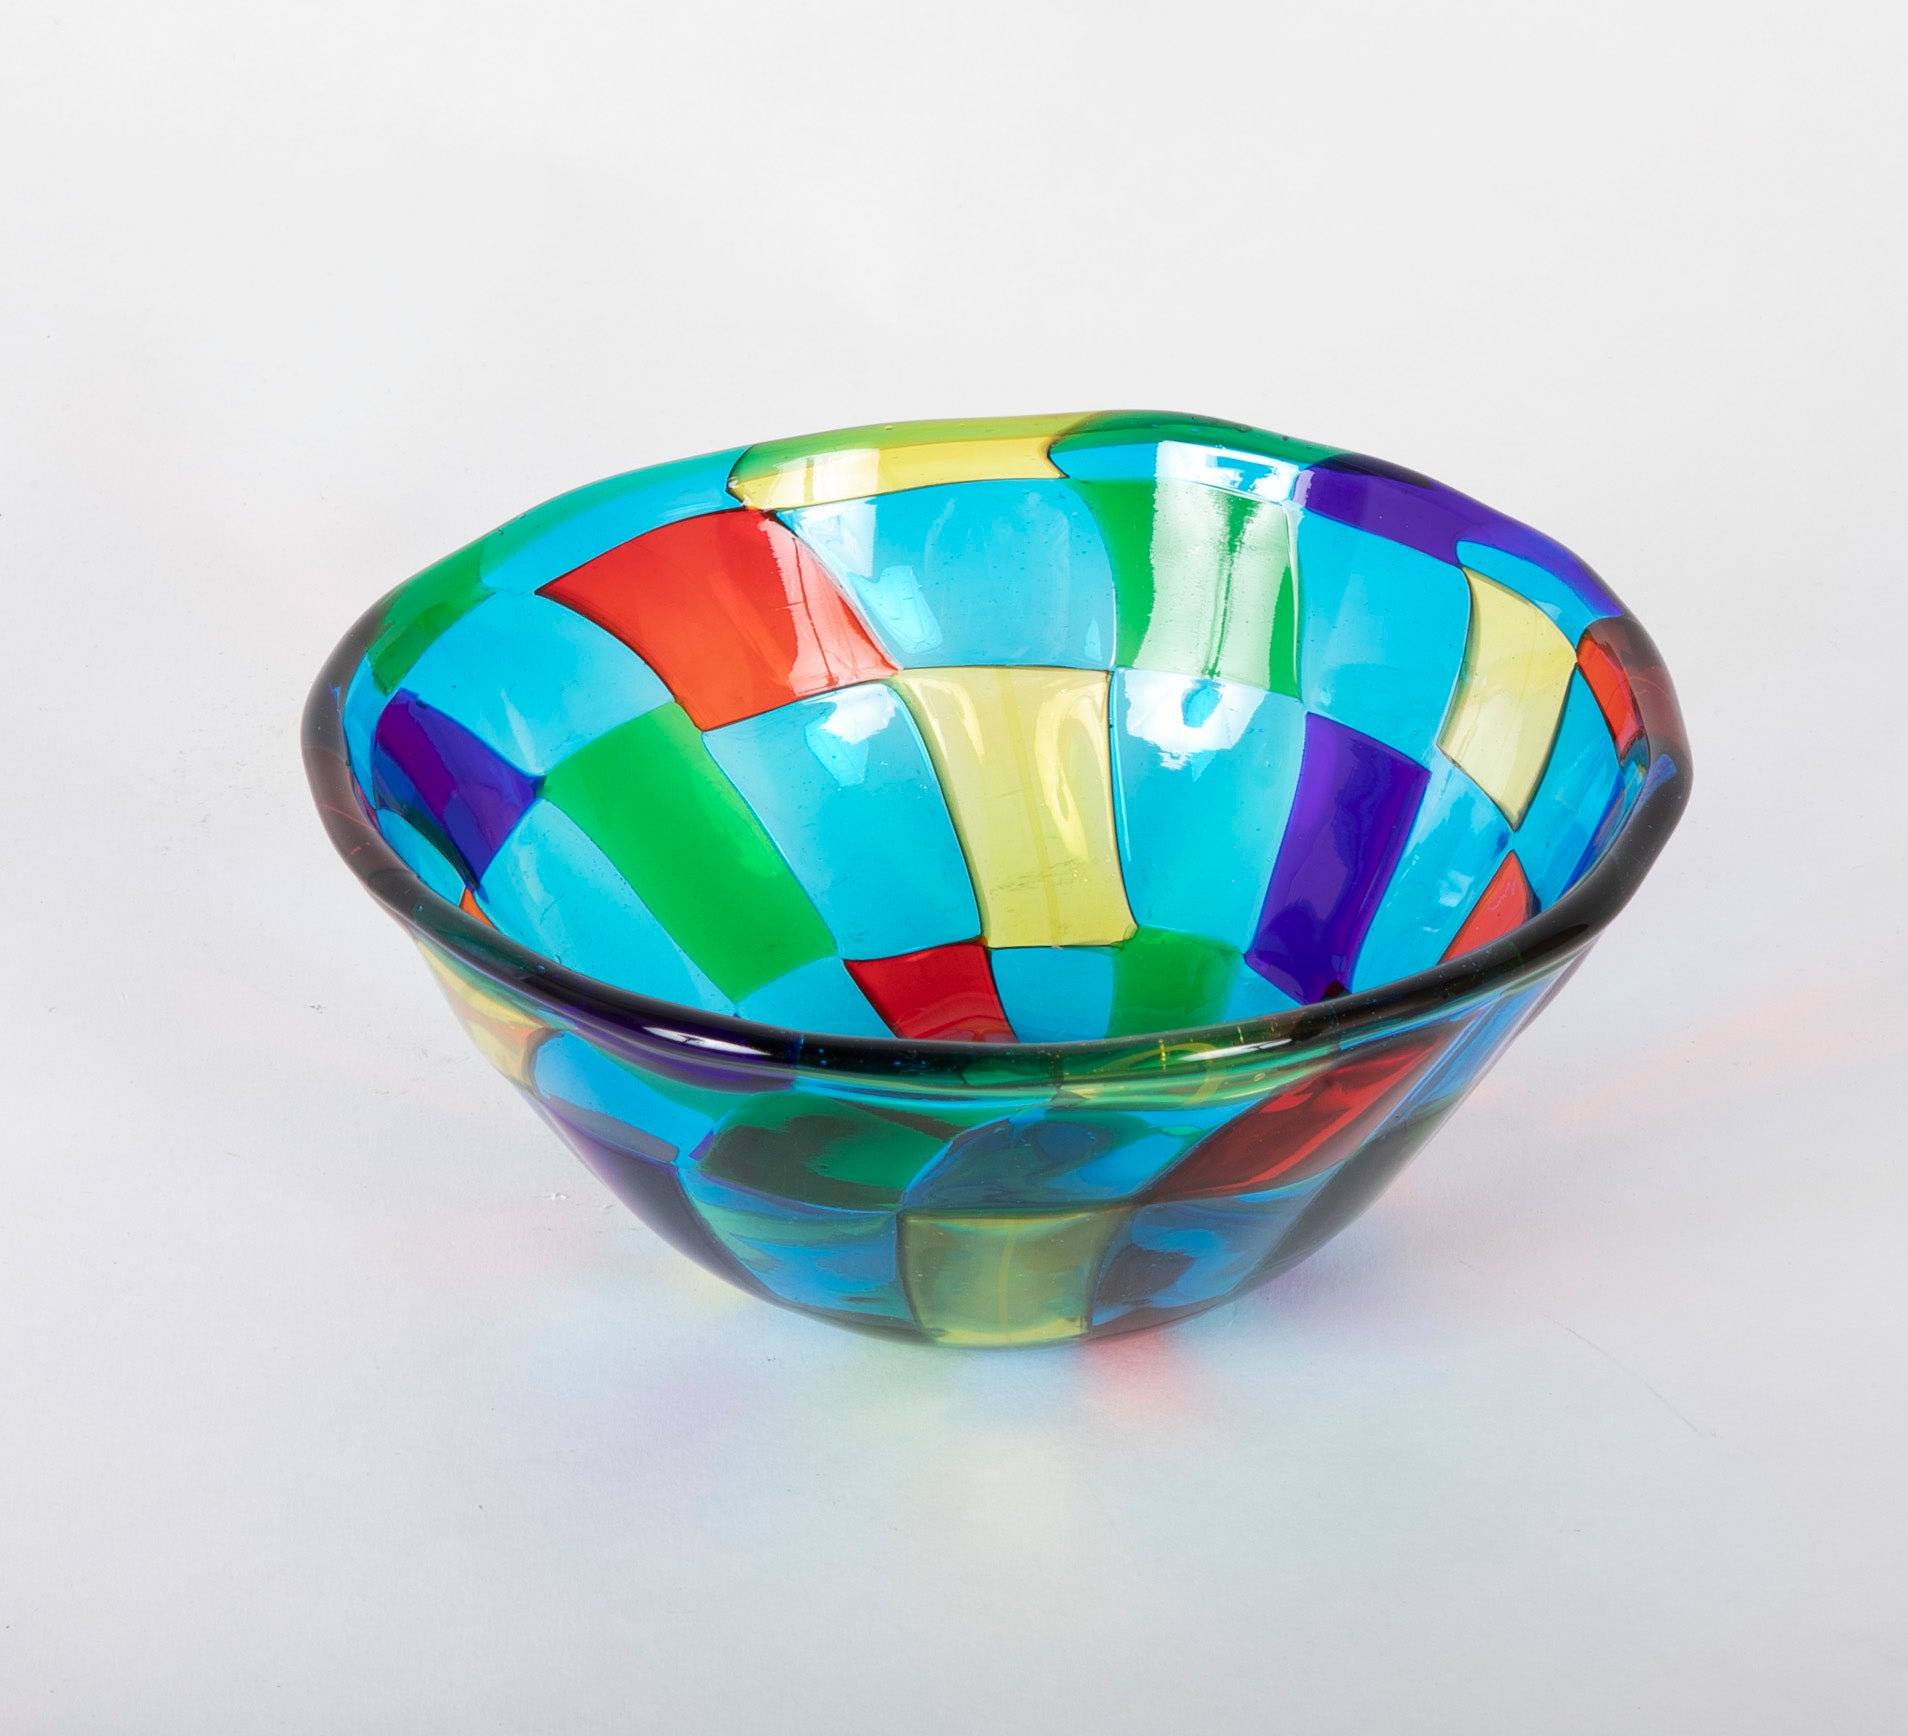 Unique Murano Glass Bowl with Blue Shades and Multicolored Filaments